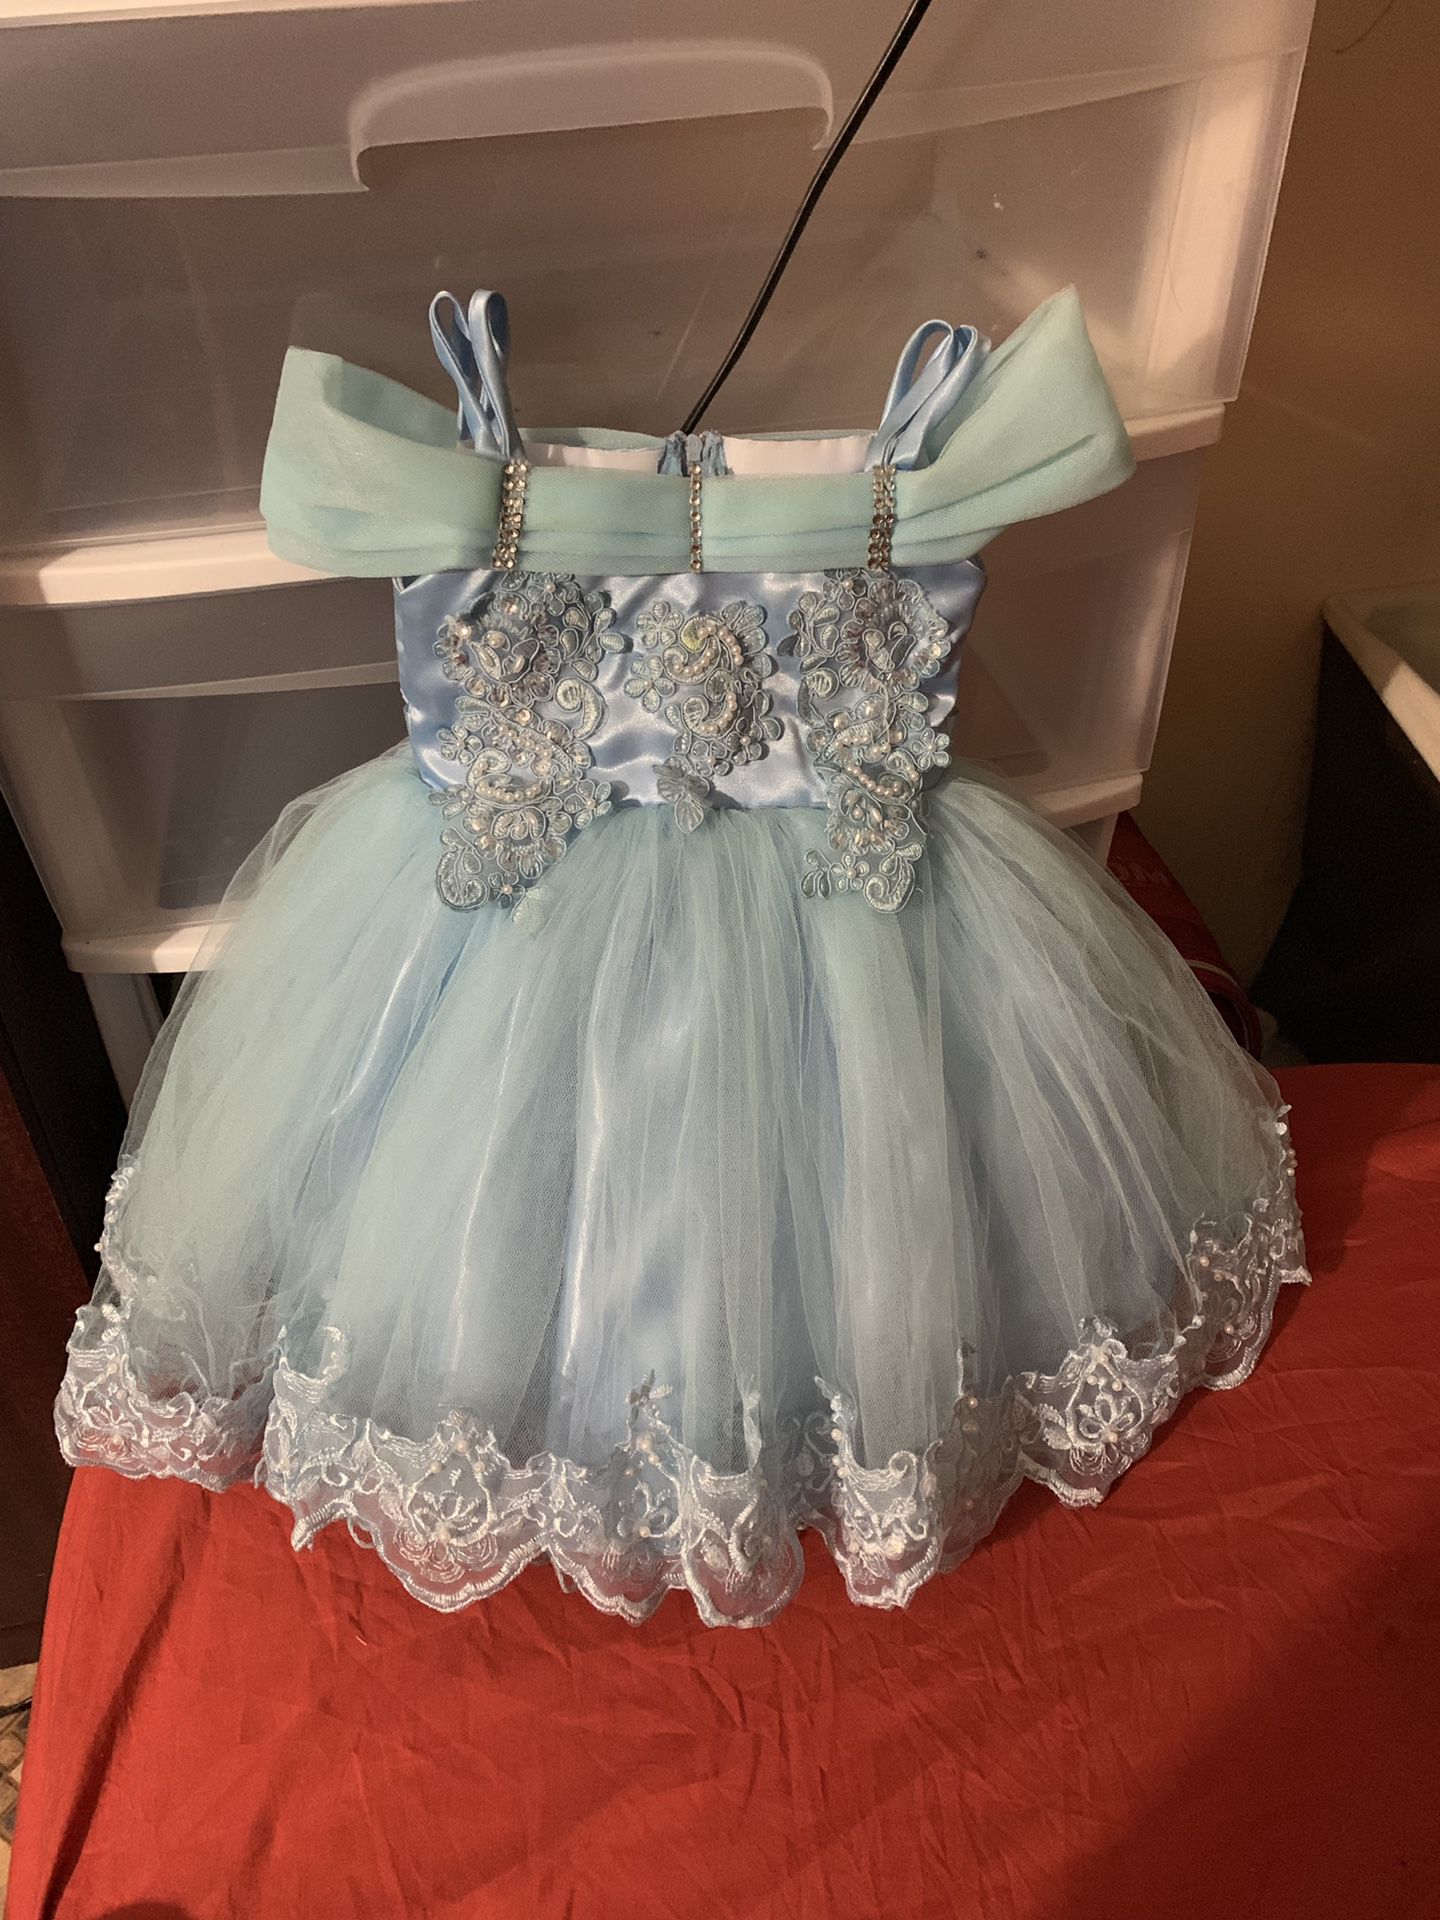 Blue birthday dress for baby 1st birthday